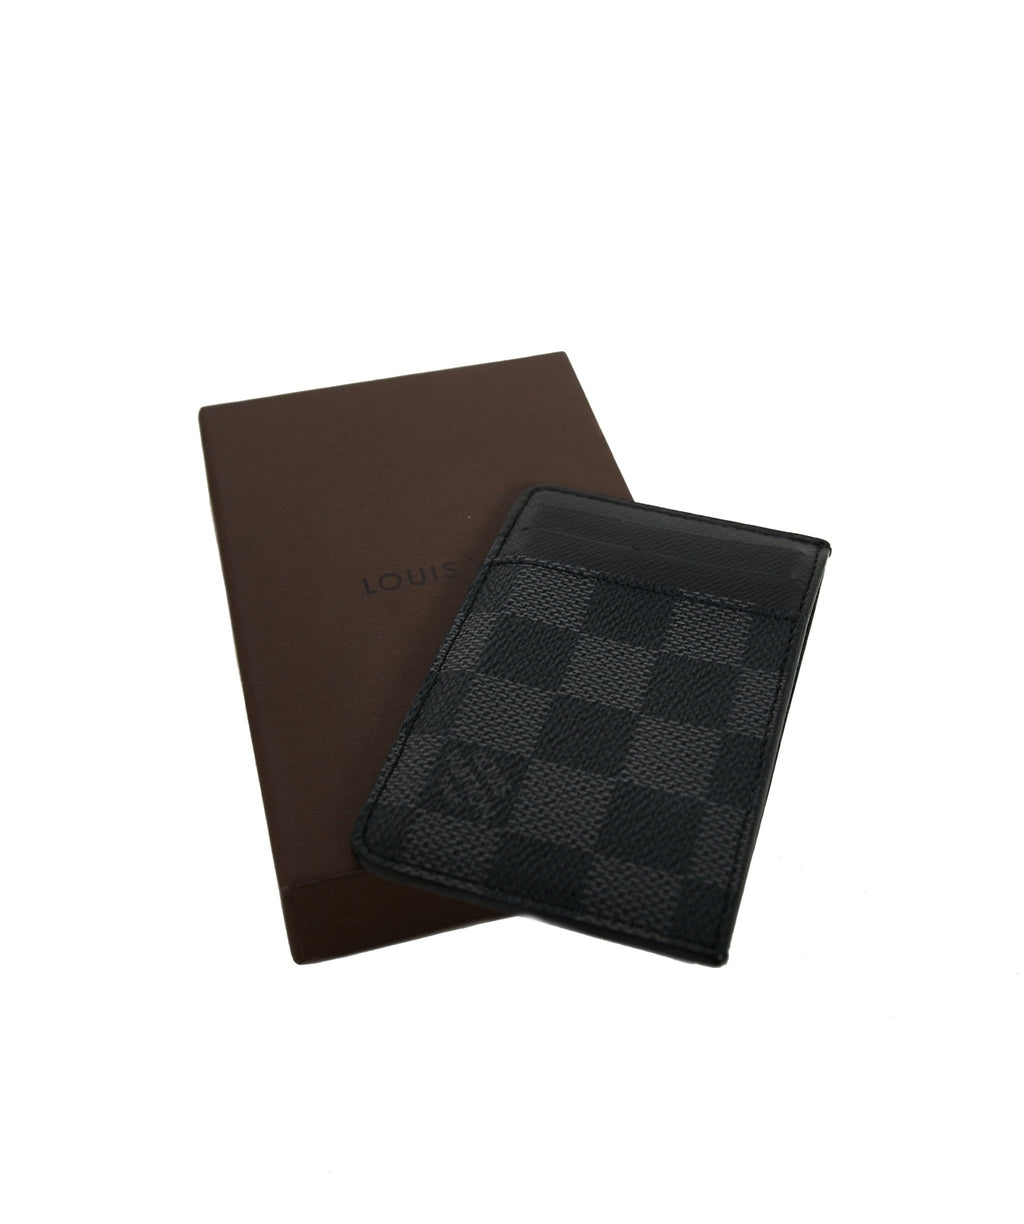 Louis Vuitton black damier card holder - ADL1112